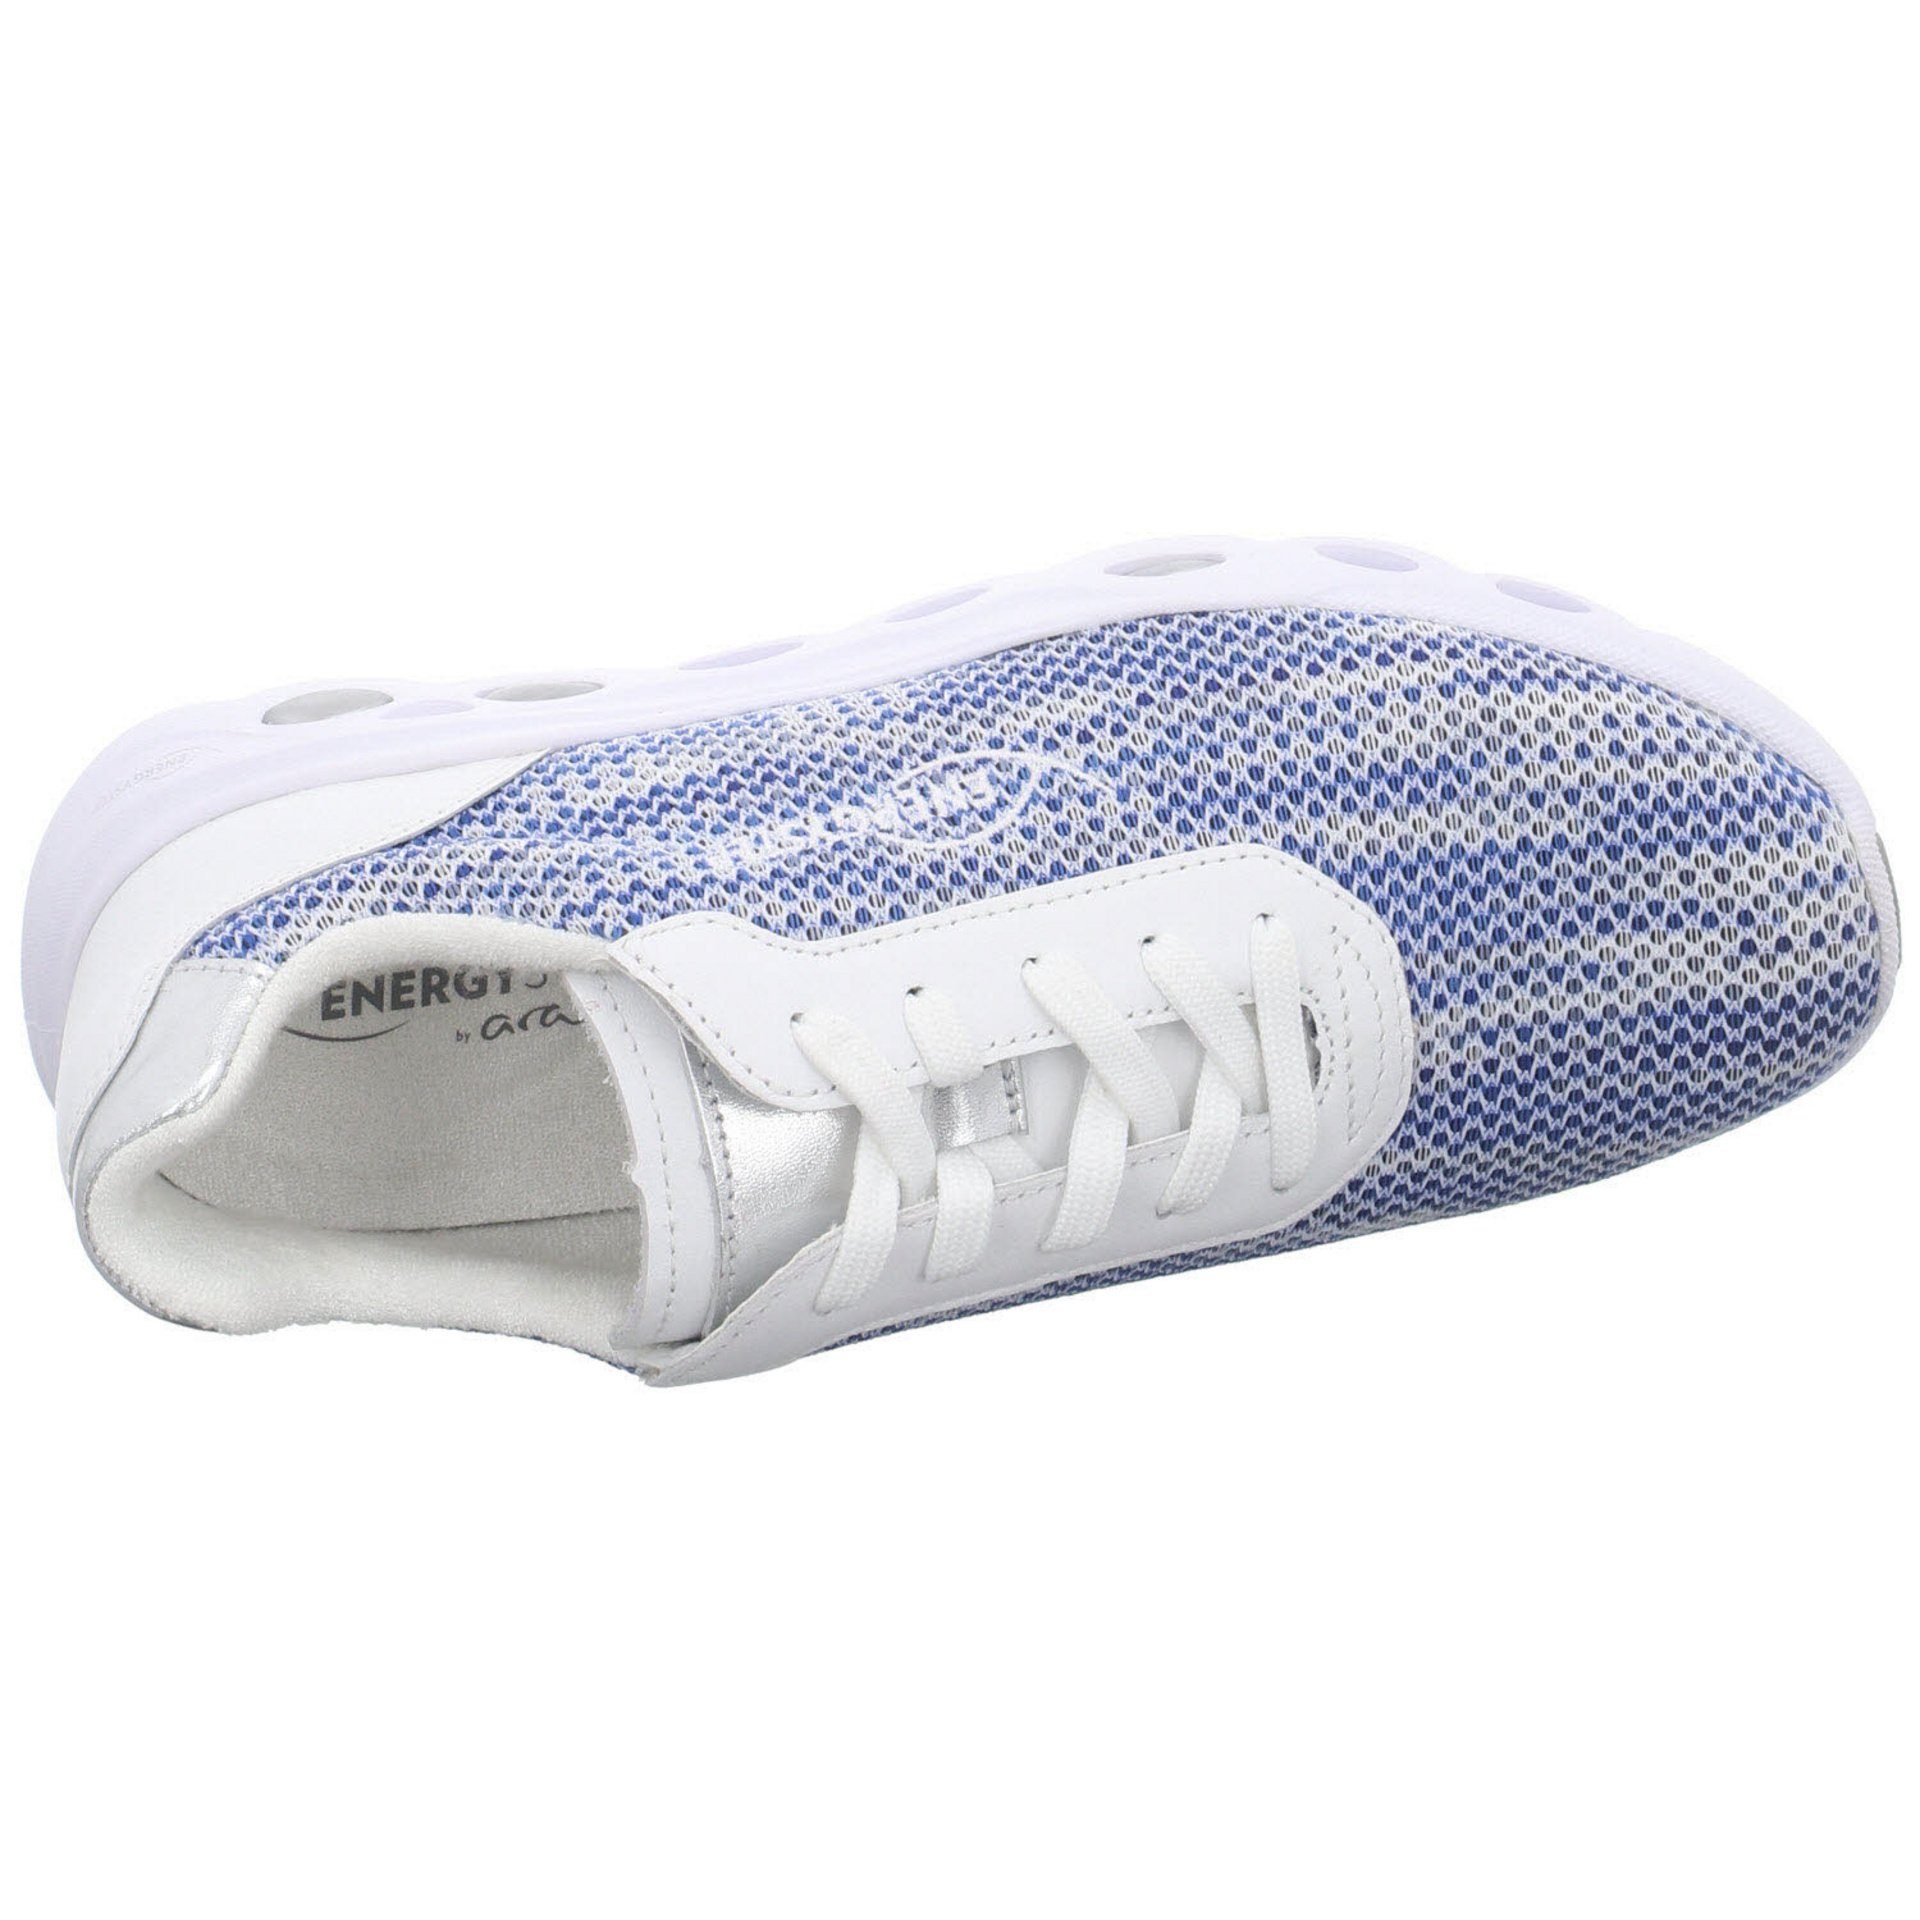 Damen Ara Sneaker Schnürschuh Malibu Synthetikkombination Schuhe Sneaker weiß